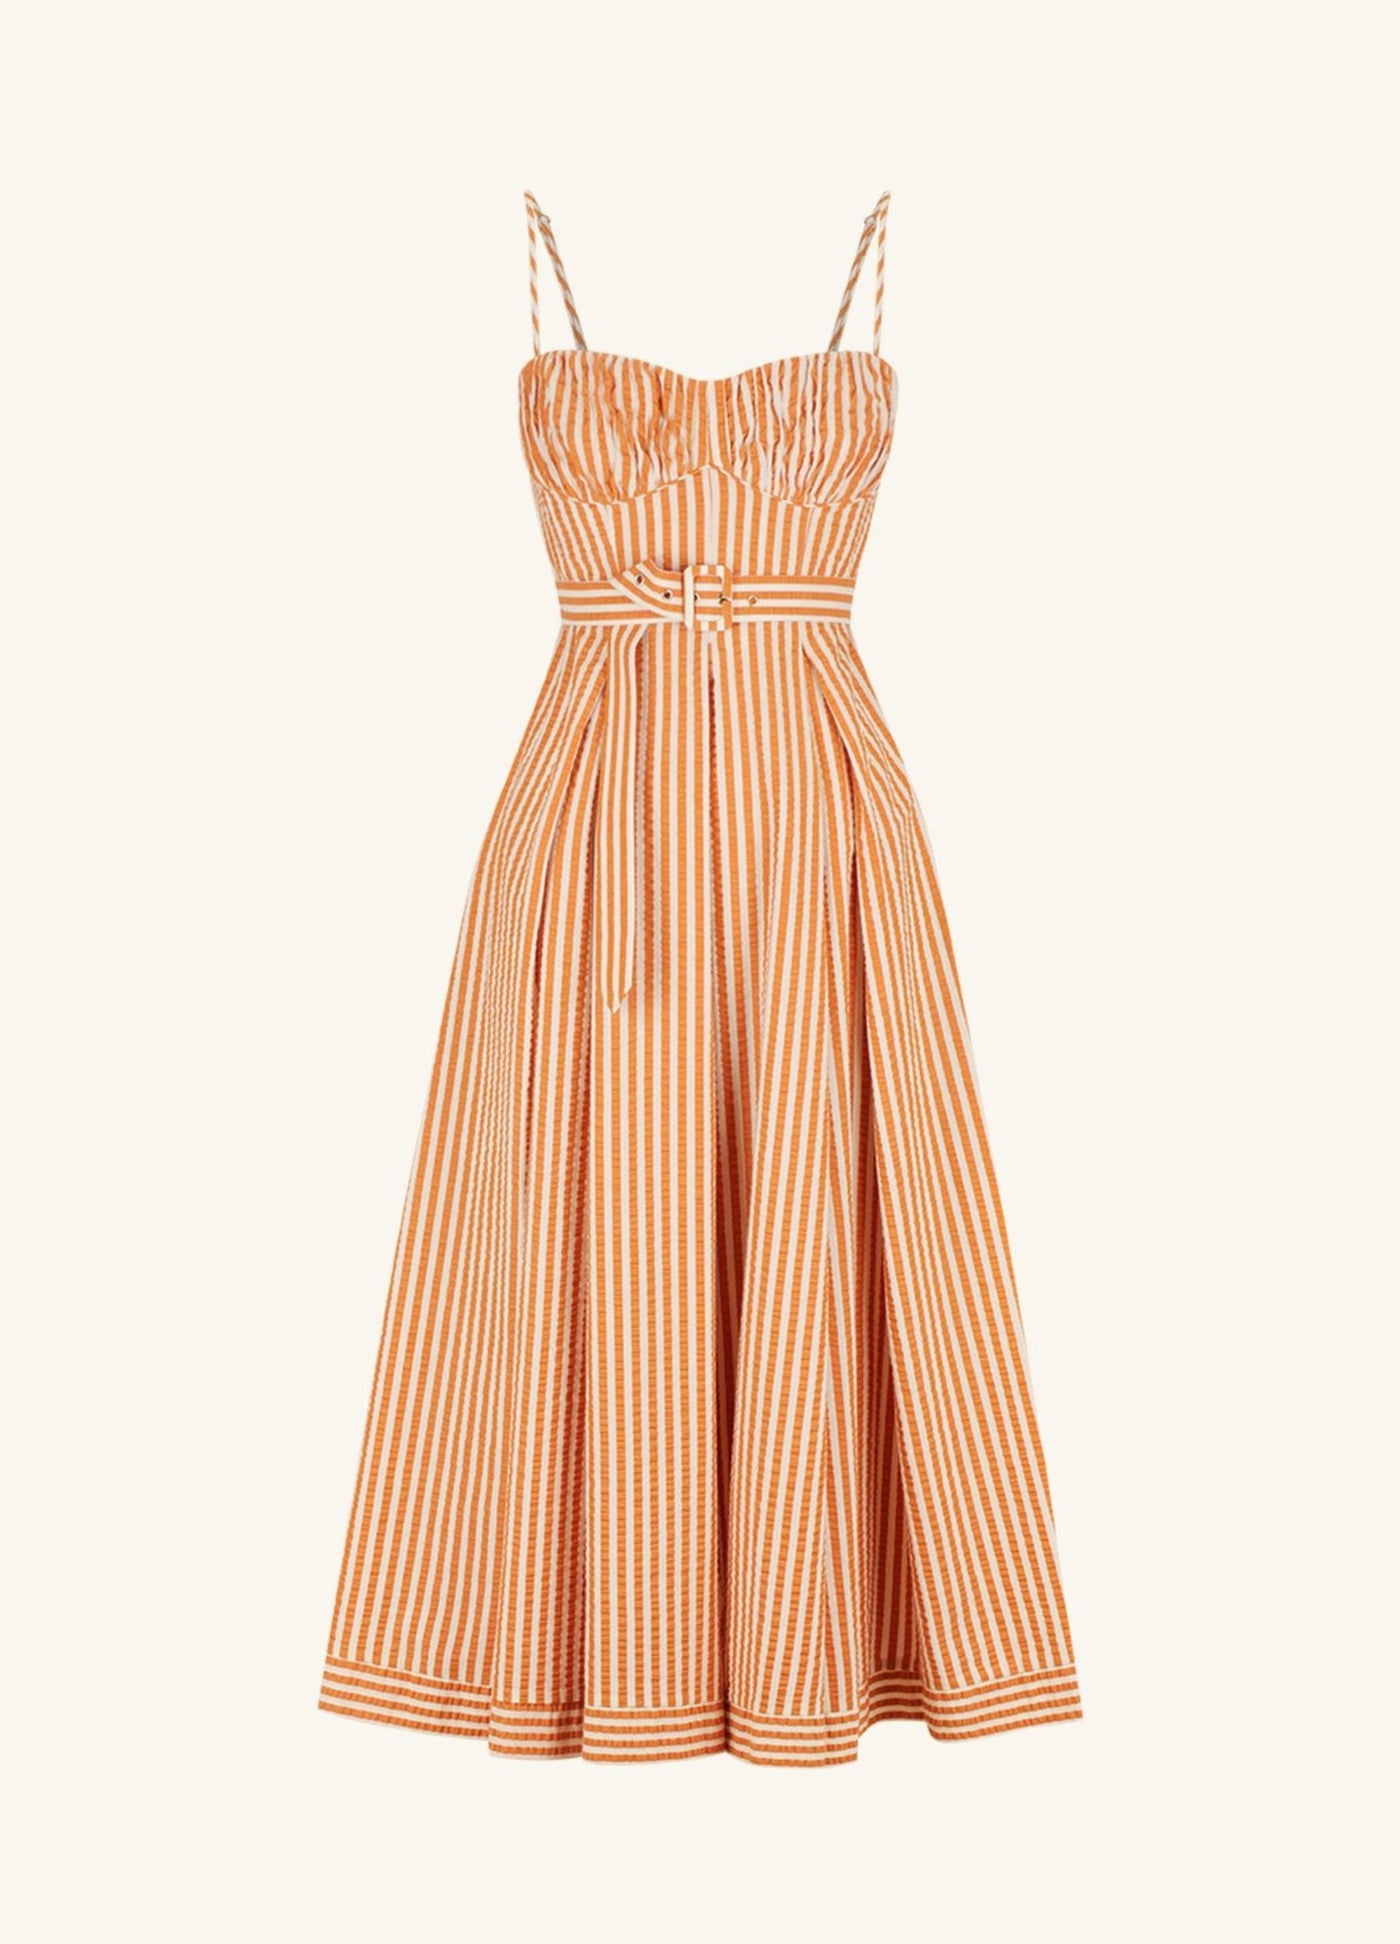 Shona Joy Hele Ruched Panelled Midi Dress in Tangerine and Ivory stripe